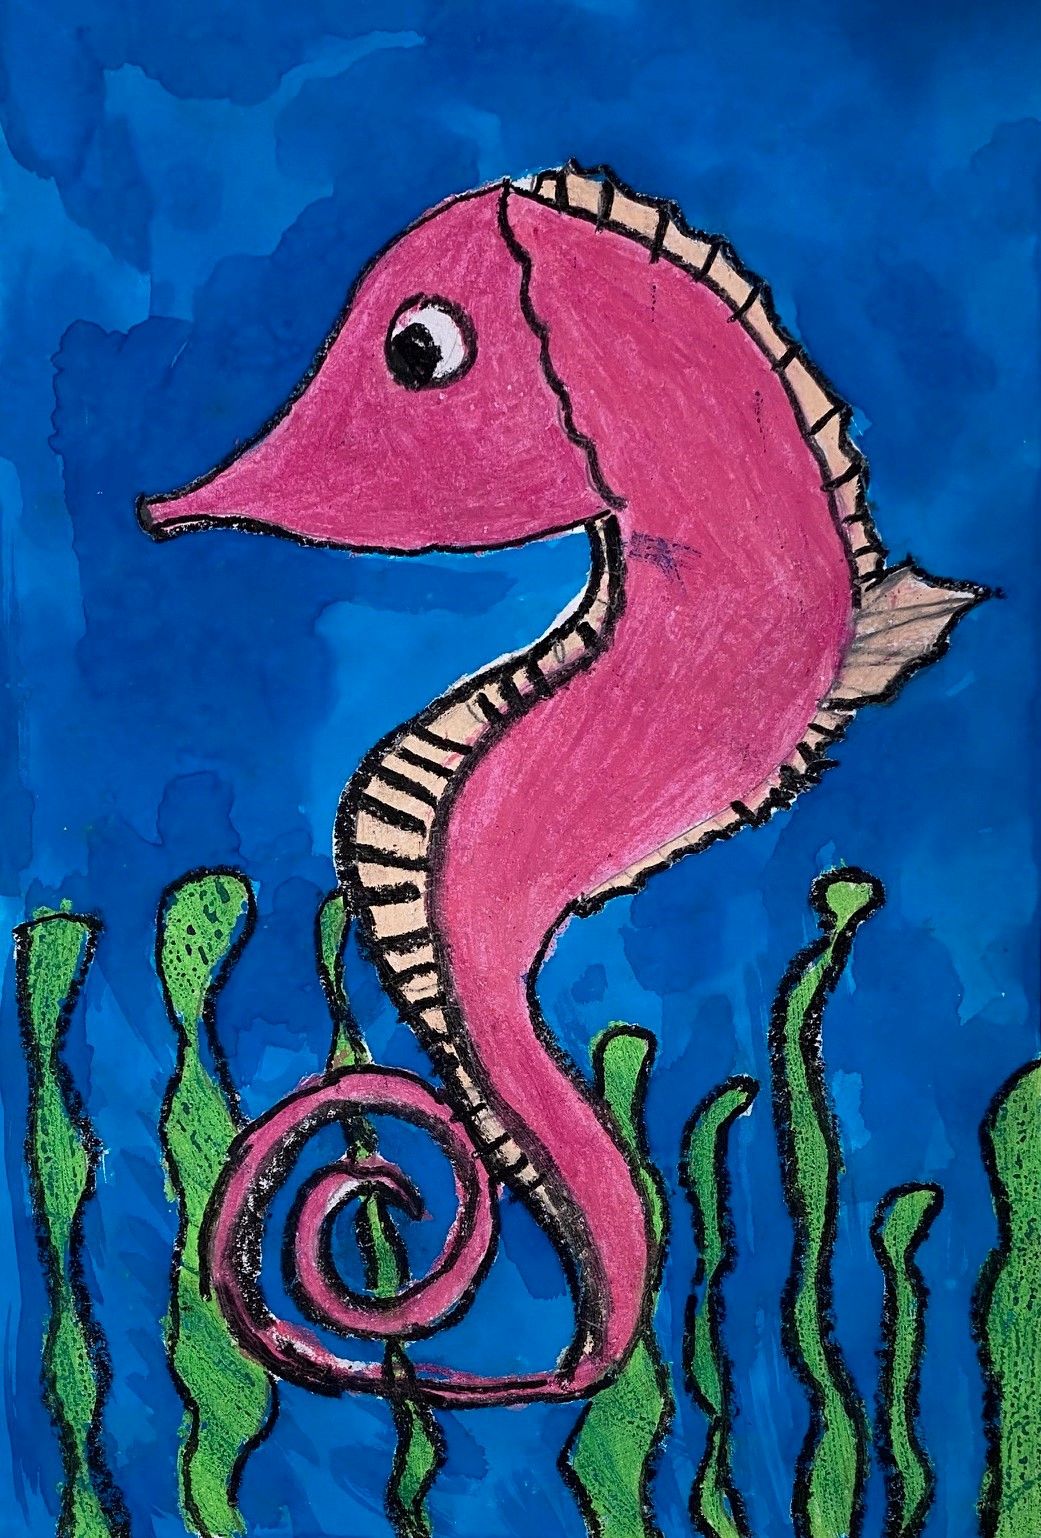 Student artwork - A seahorse in its natural habitat